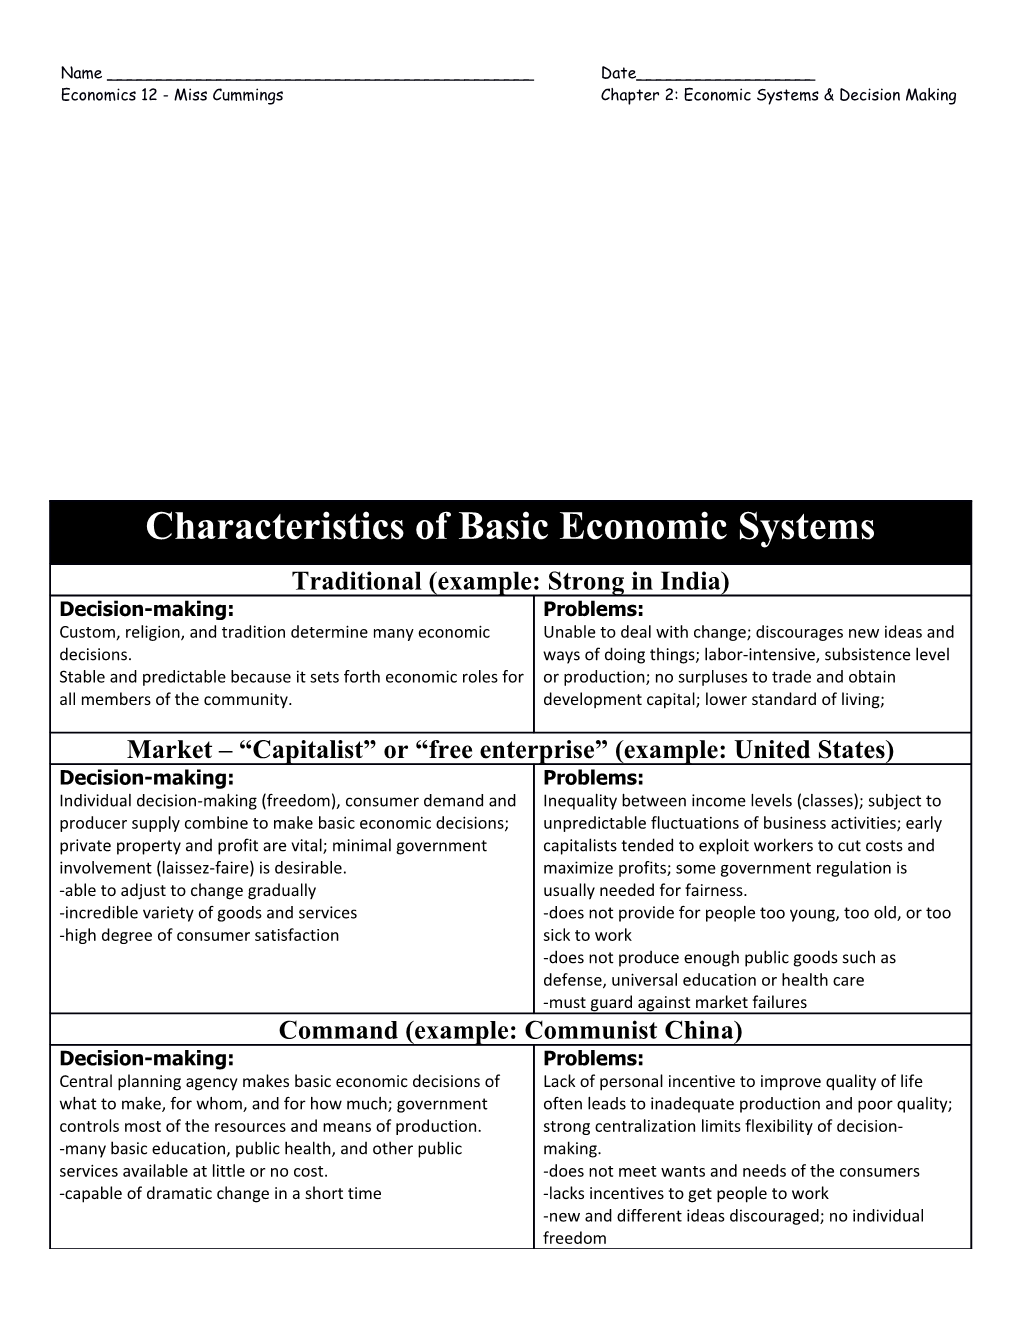 Economics 12 - Miss Cummings Chapter 2: Economic Systems & Decision Making